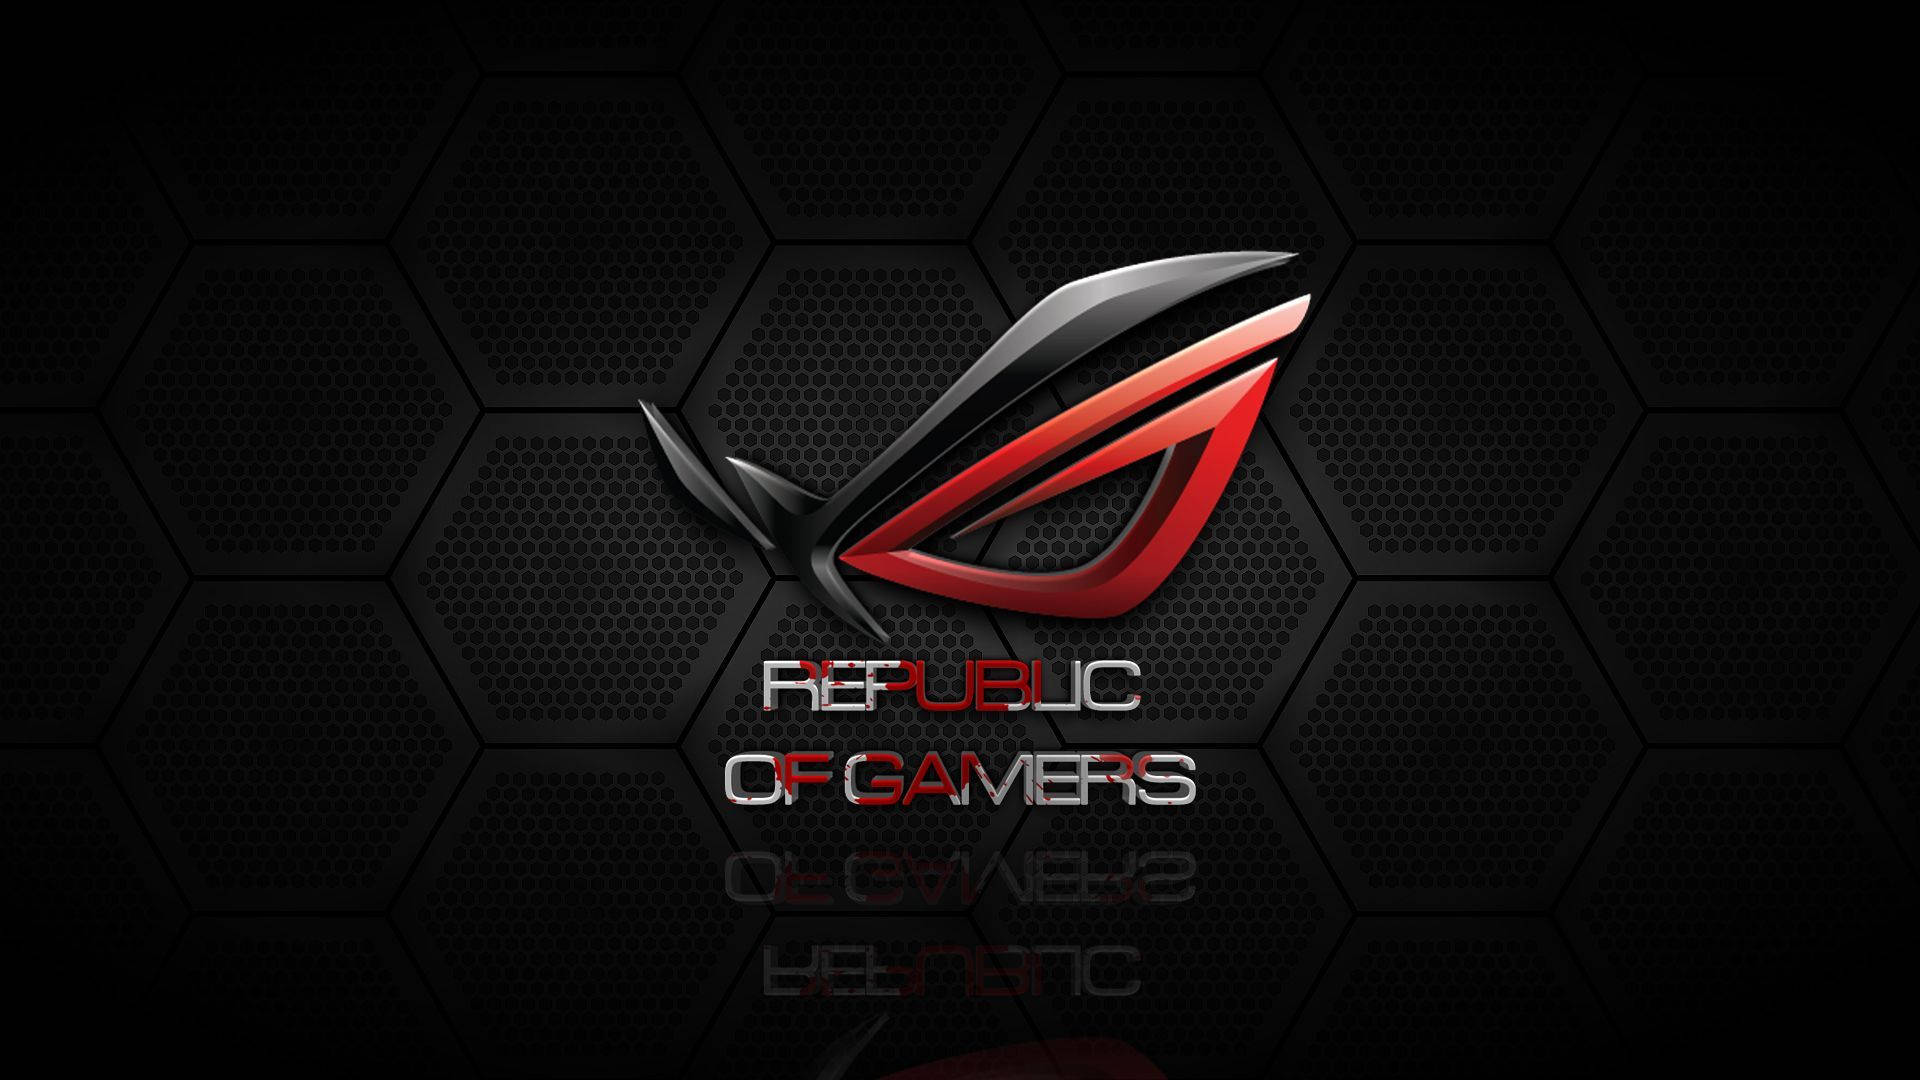 Rog Republic Of Gamers